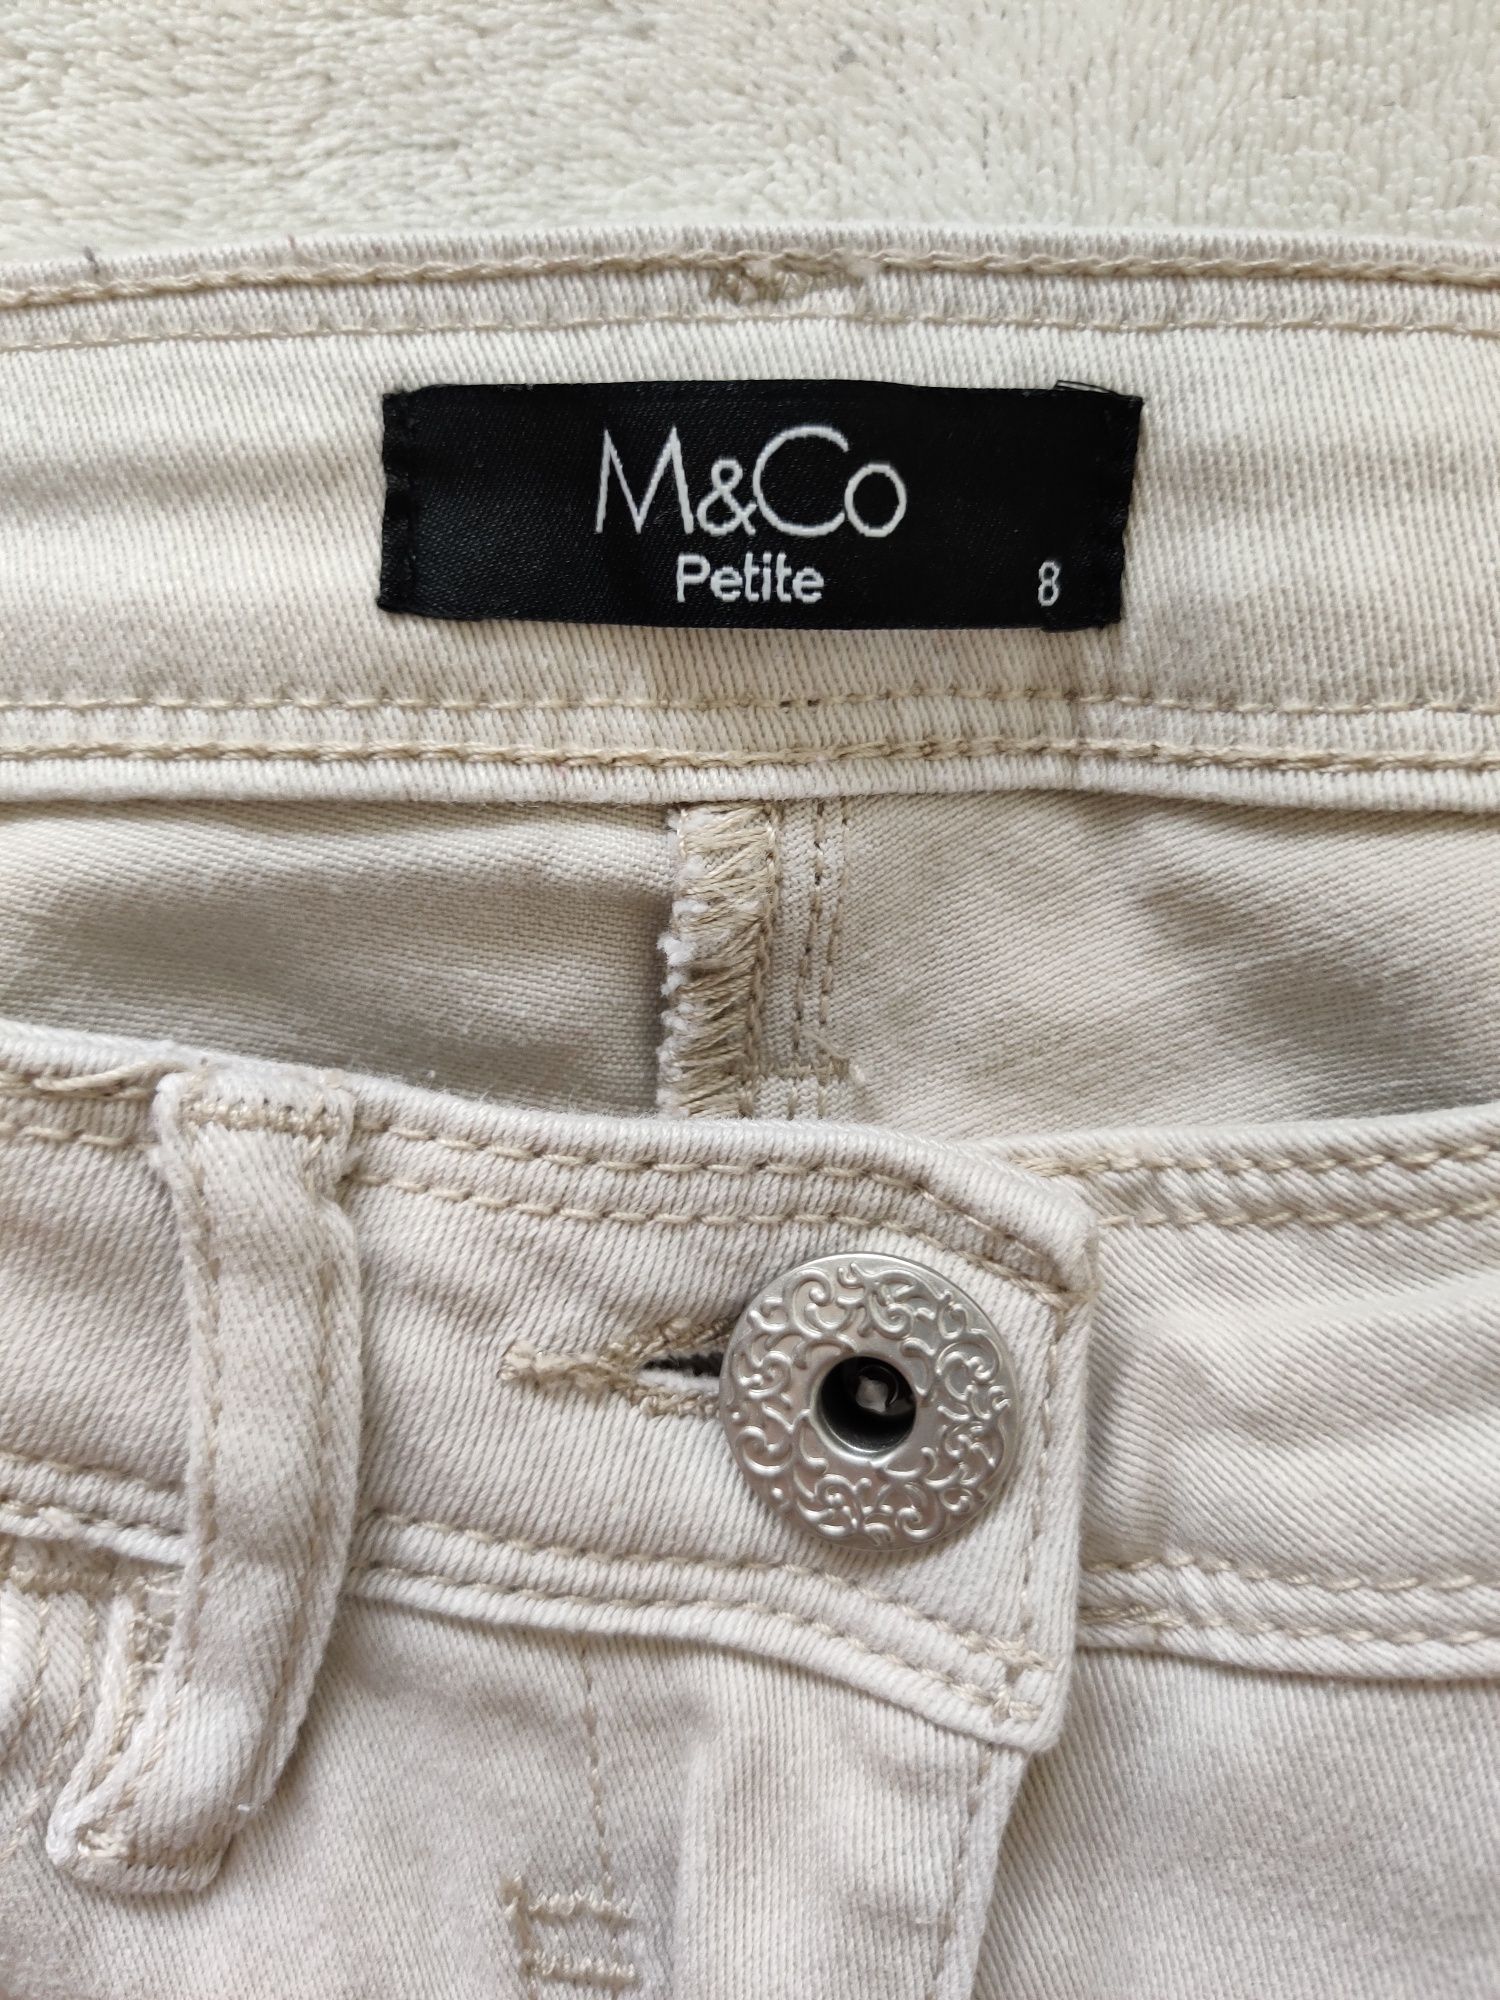 Spodnie M&Co petite 36 S zamki suwaki elastan